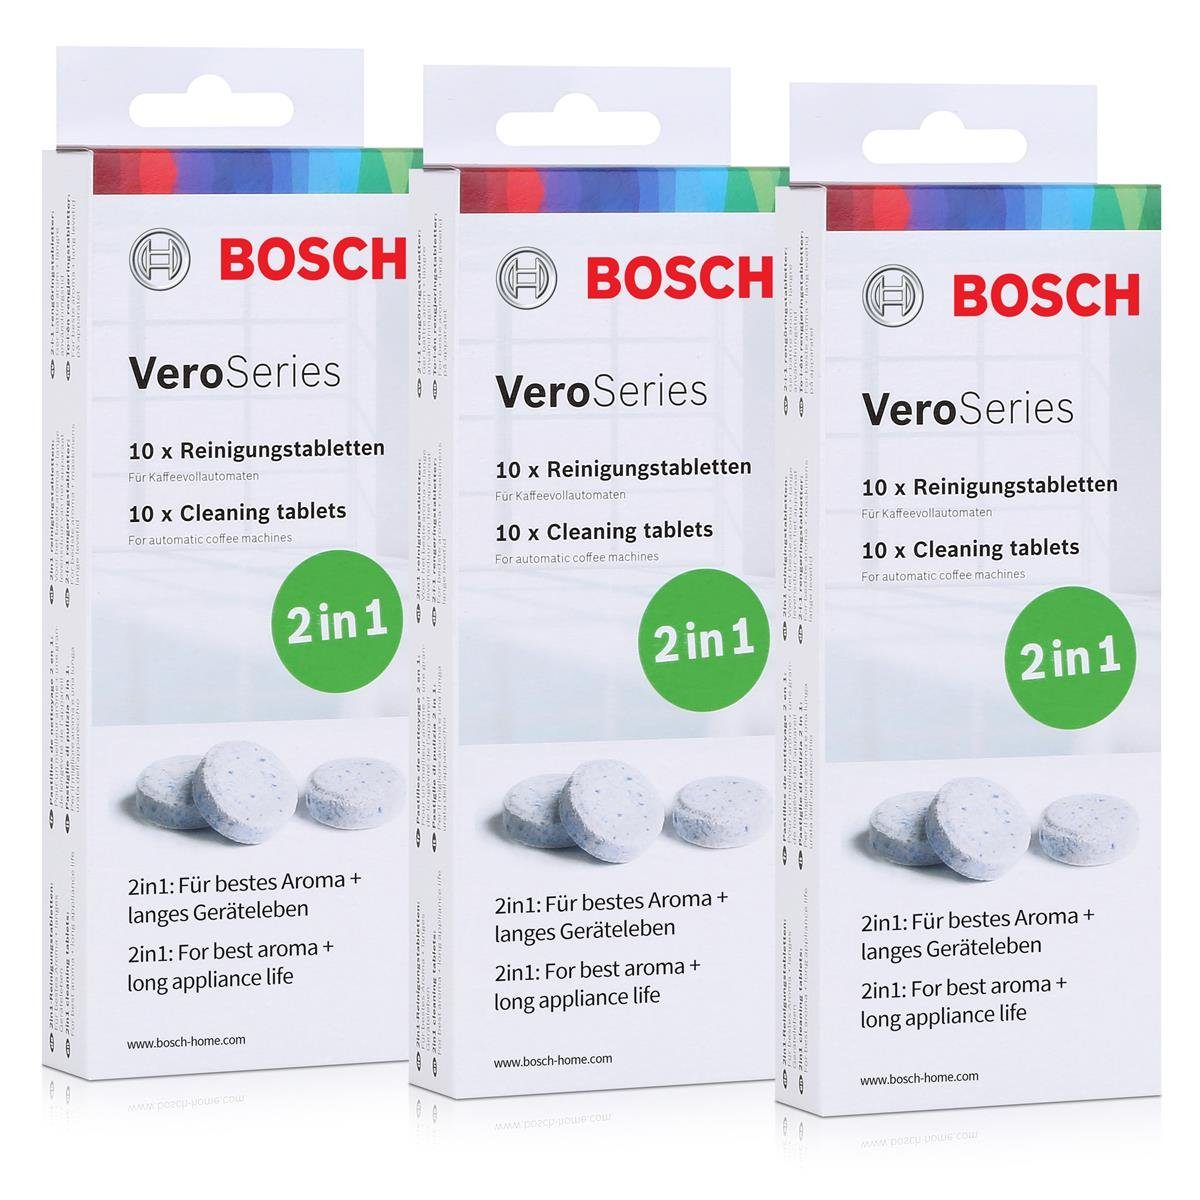 BOSCH Bosch VeroSeries TCZ8001 Reinigungstabletten 2in1 - 10 Tabletten (3er Reinigungstabletten